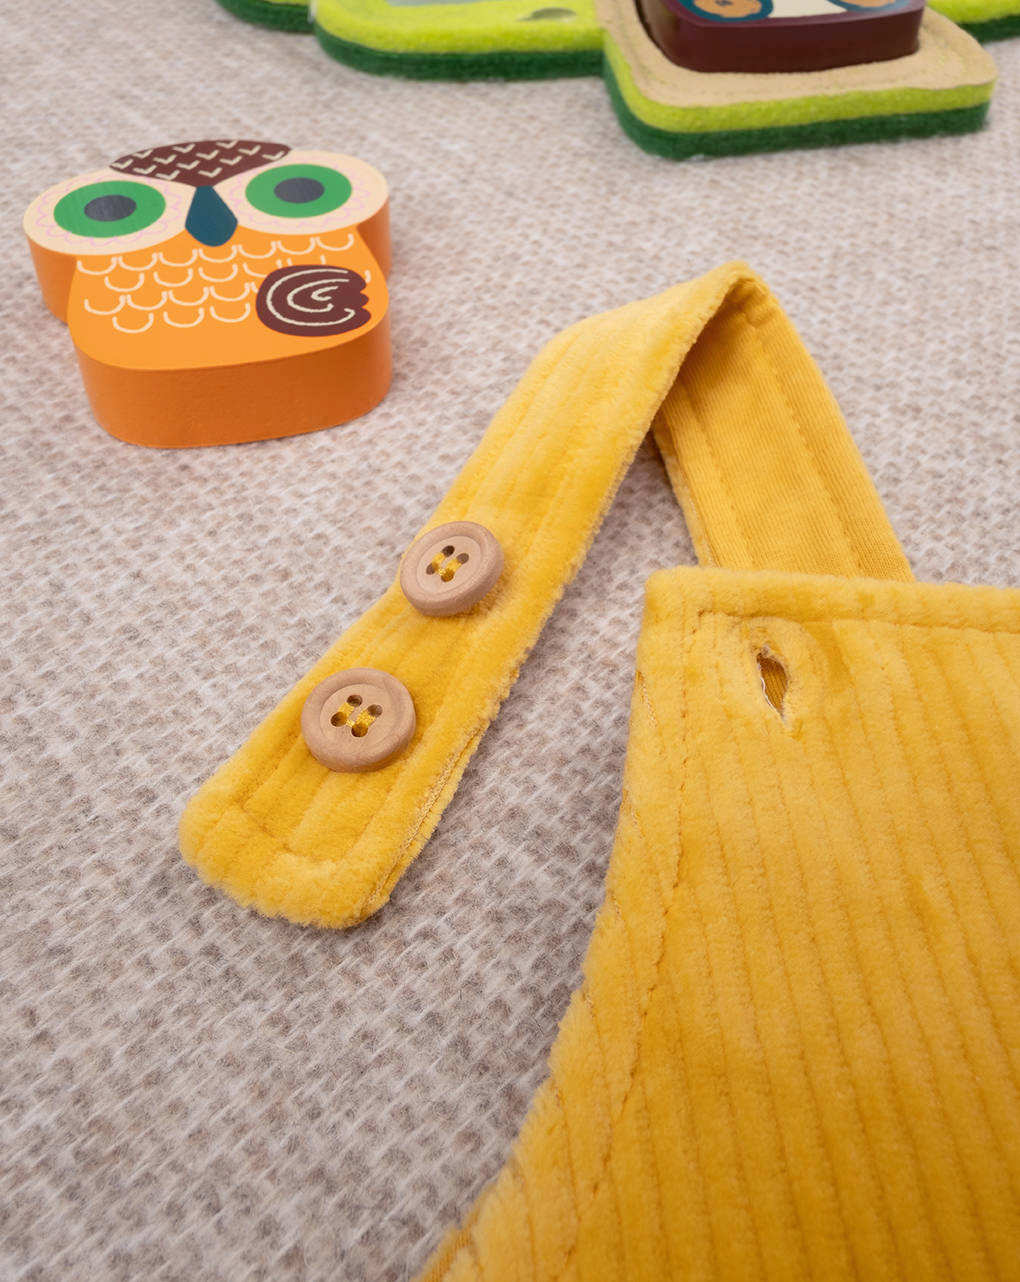 Peto amarillo traje bebé - Prénatal